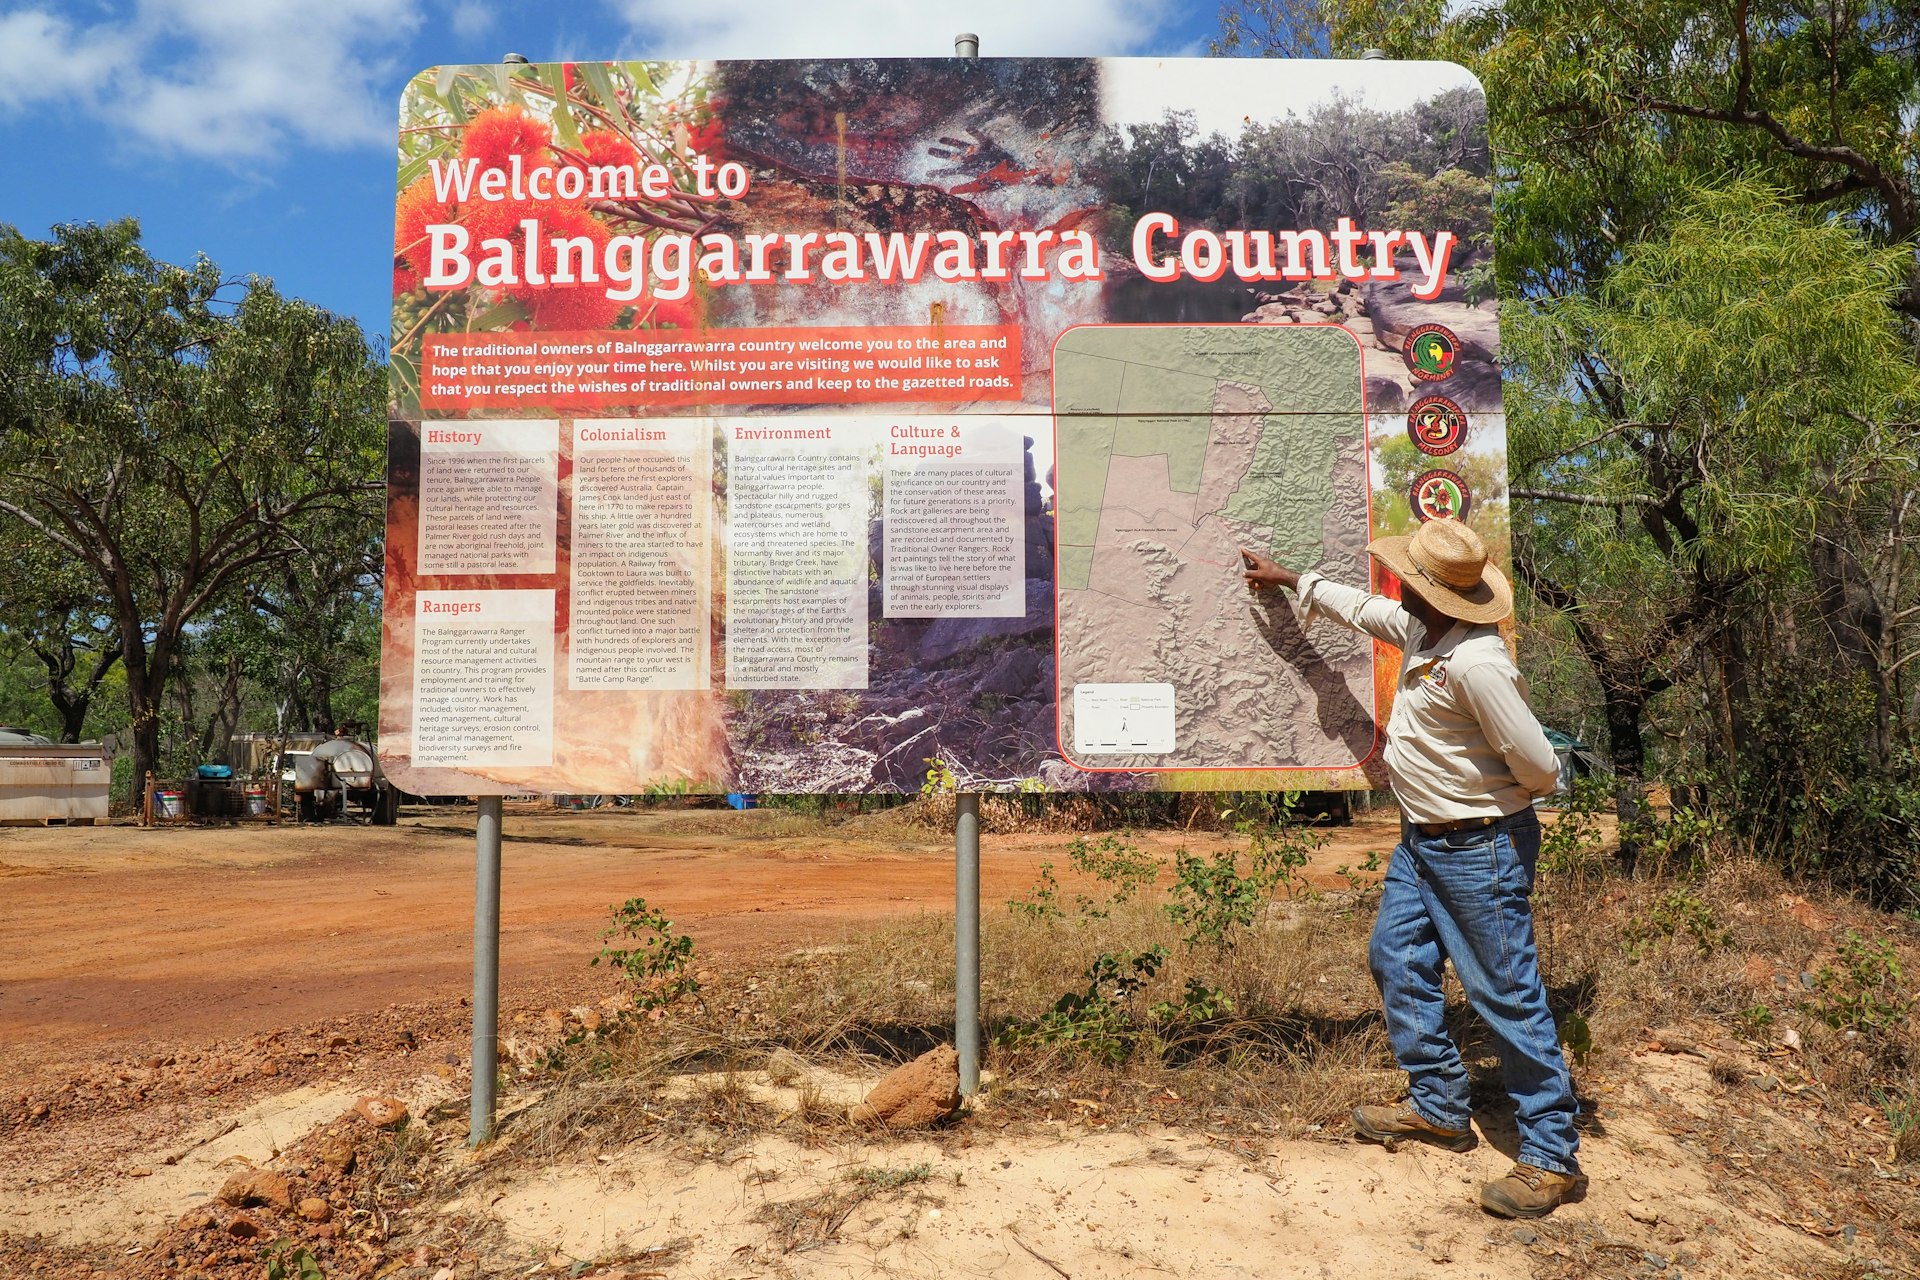 Vince Harrigan welcomes guests to Balnggarrawarra Country.